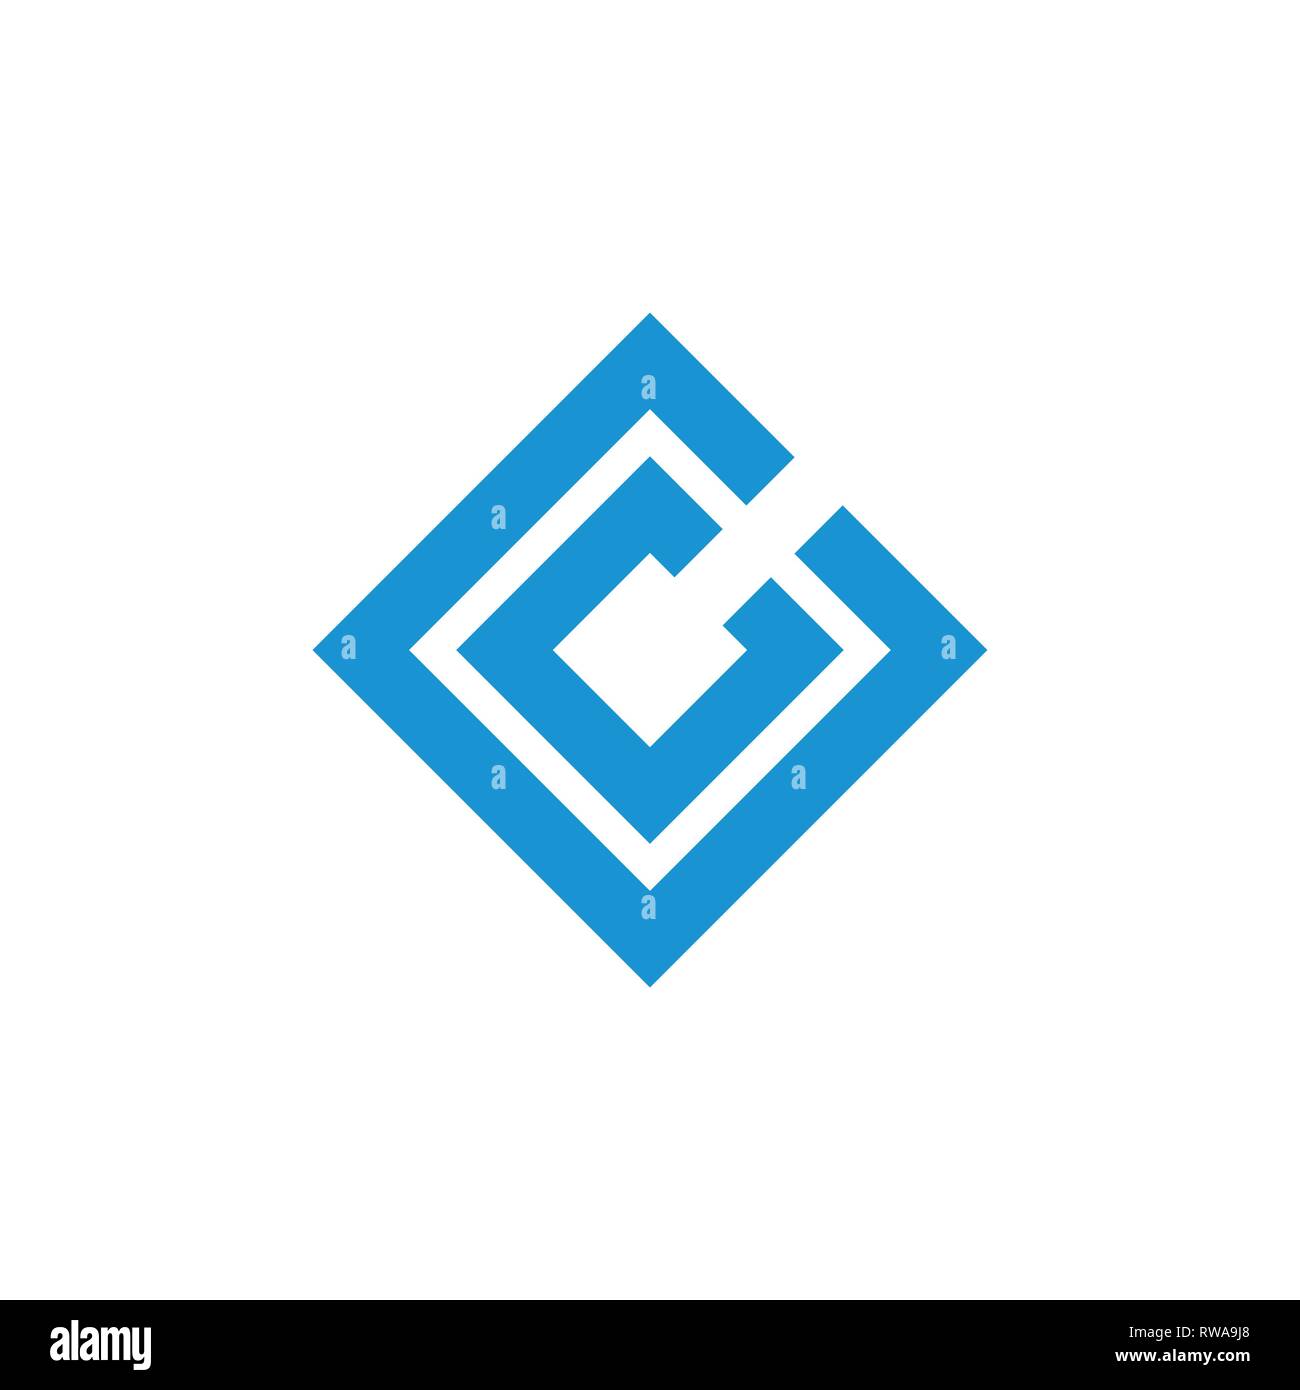 letters cc square geometric logo vector Stock Vector